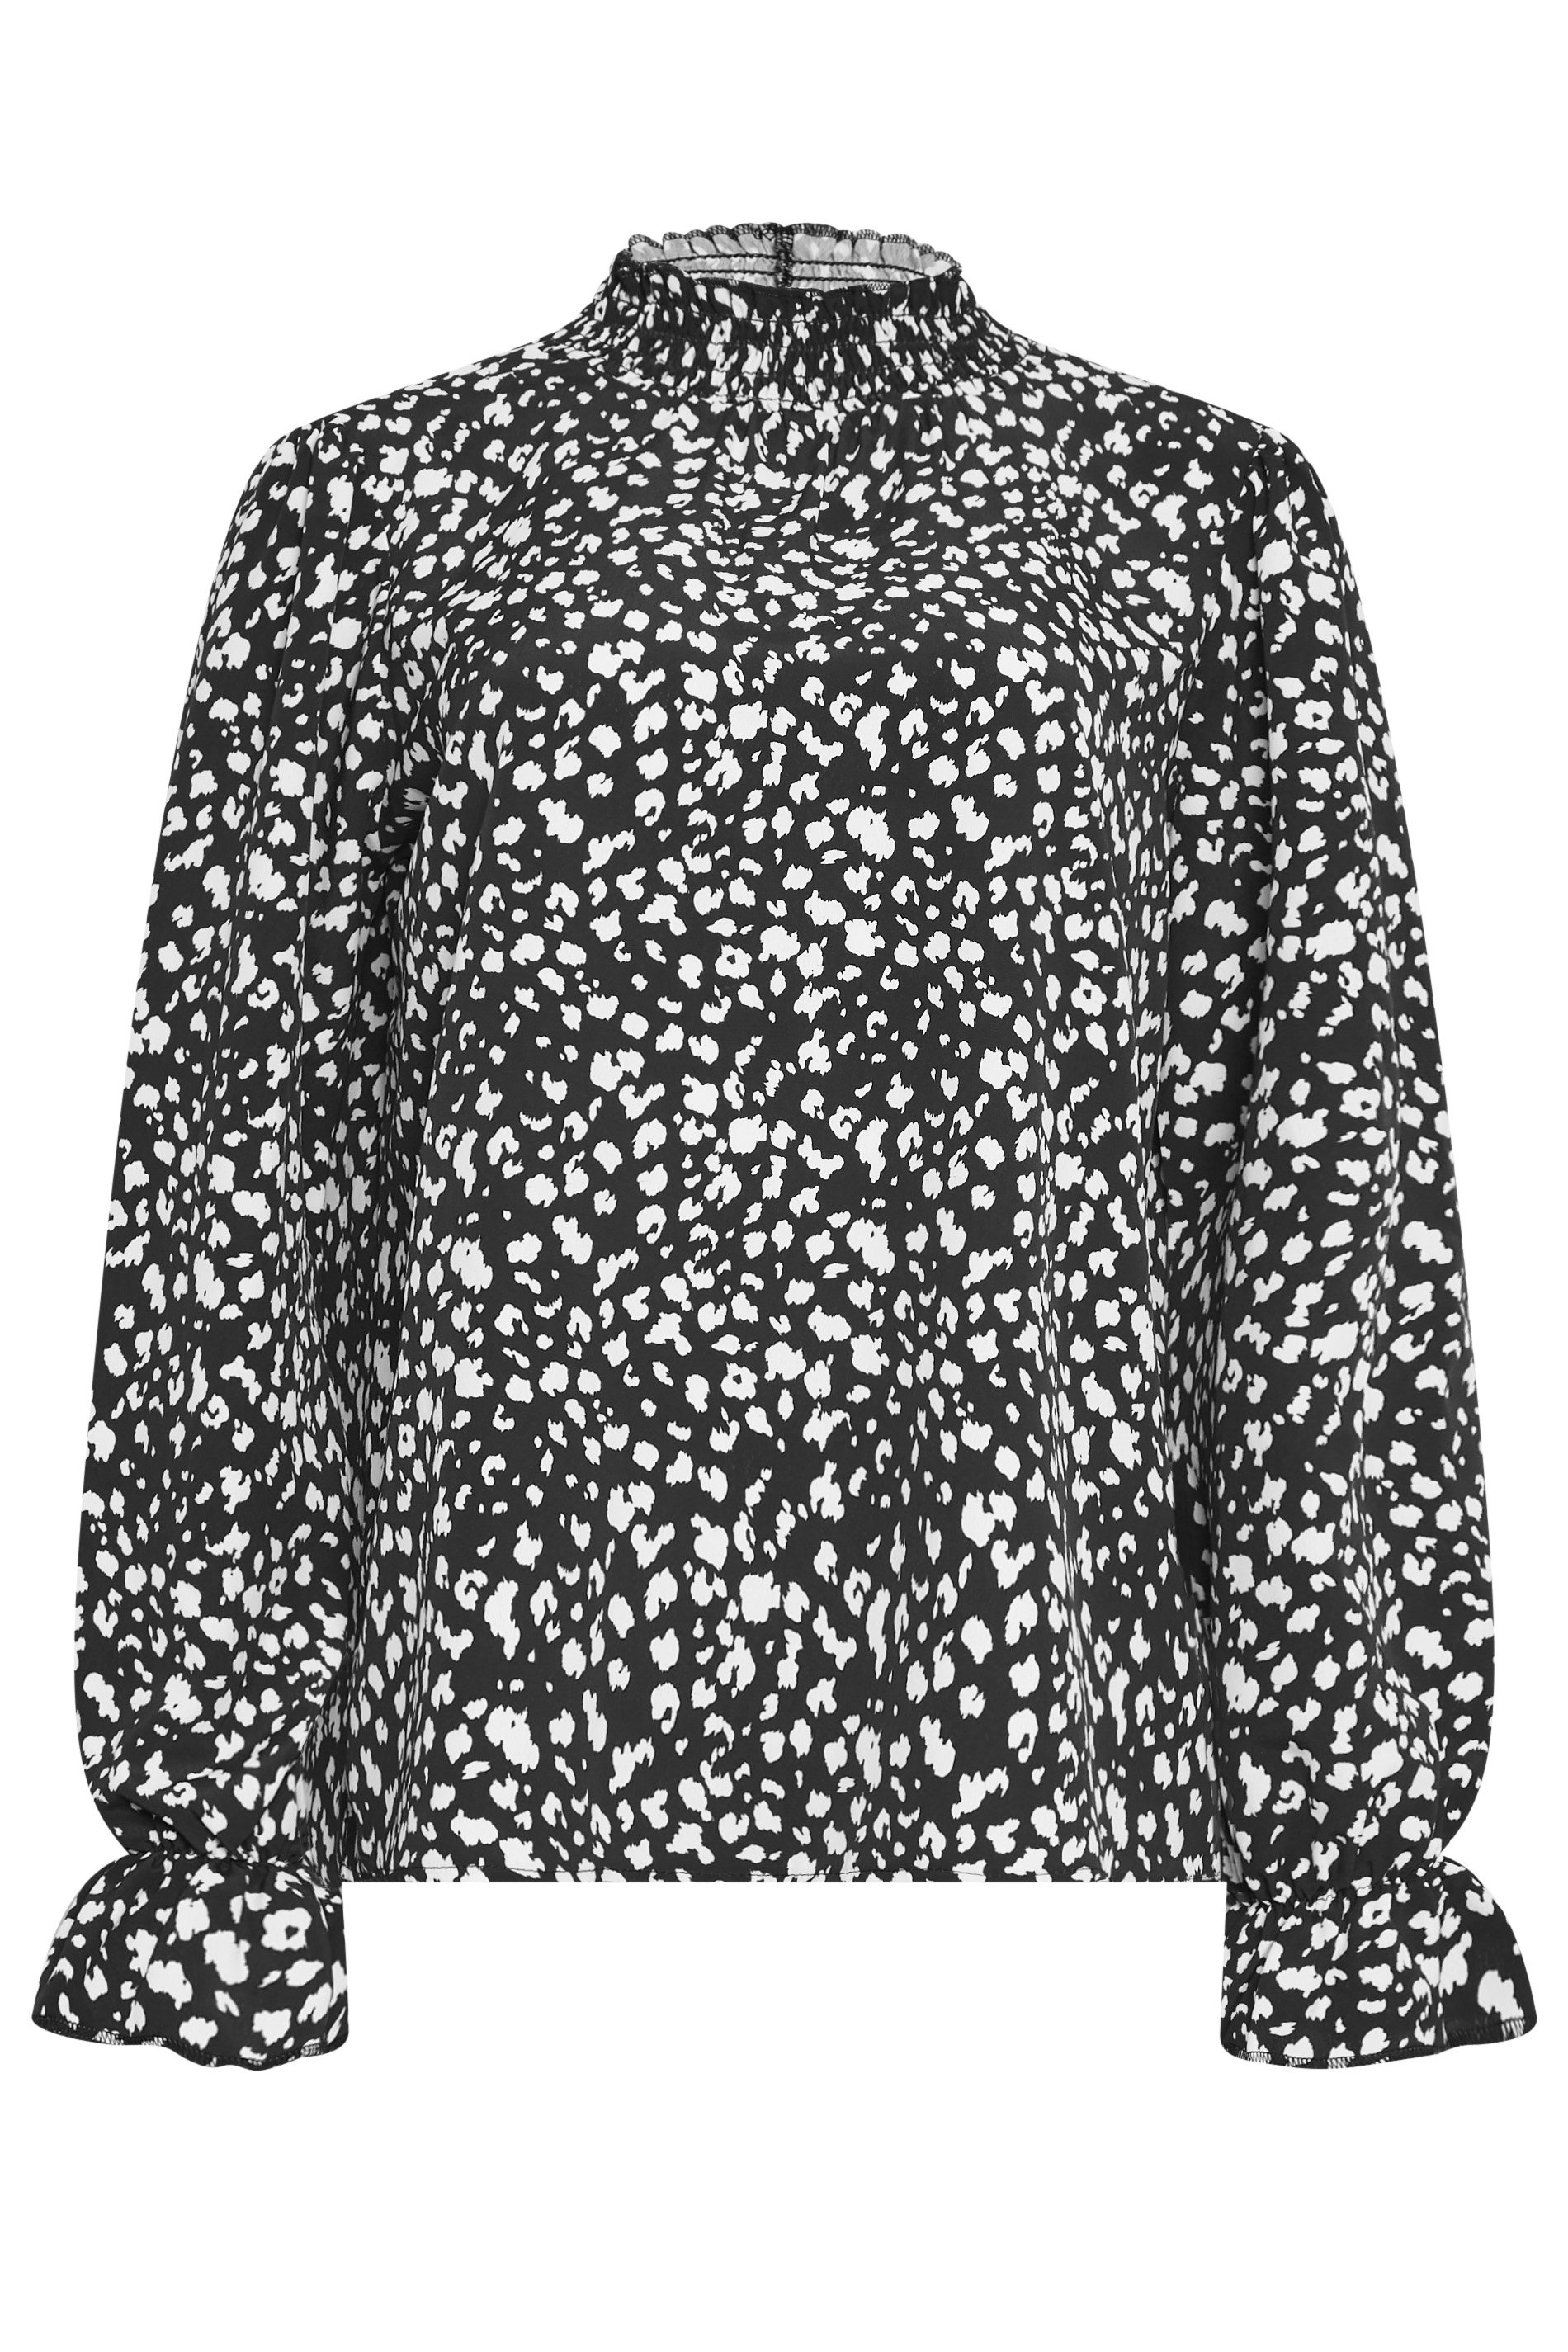 M&Co Black Animal Print Shirred High Neck Blouse | M&Co